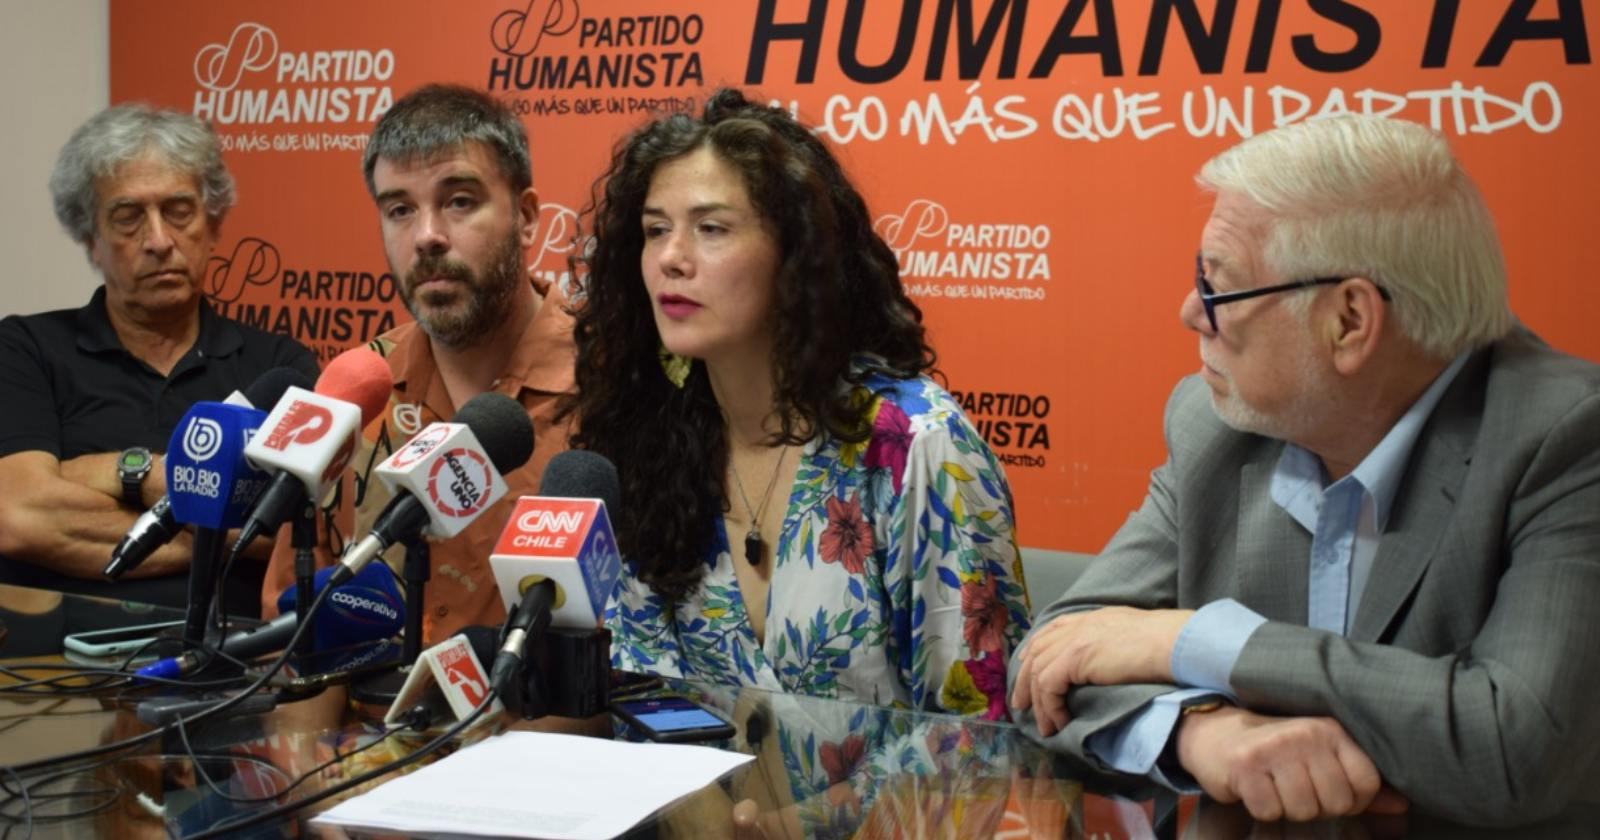 Partido Humanista Catalina Valenzuela